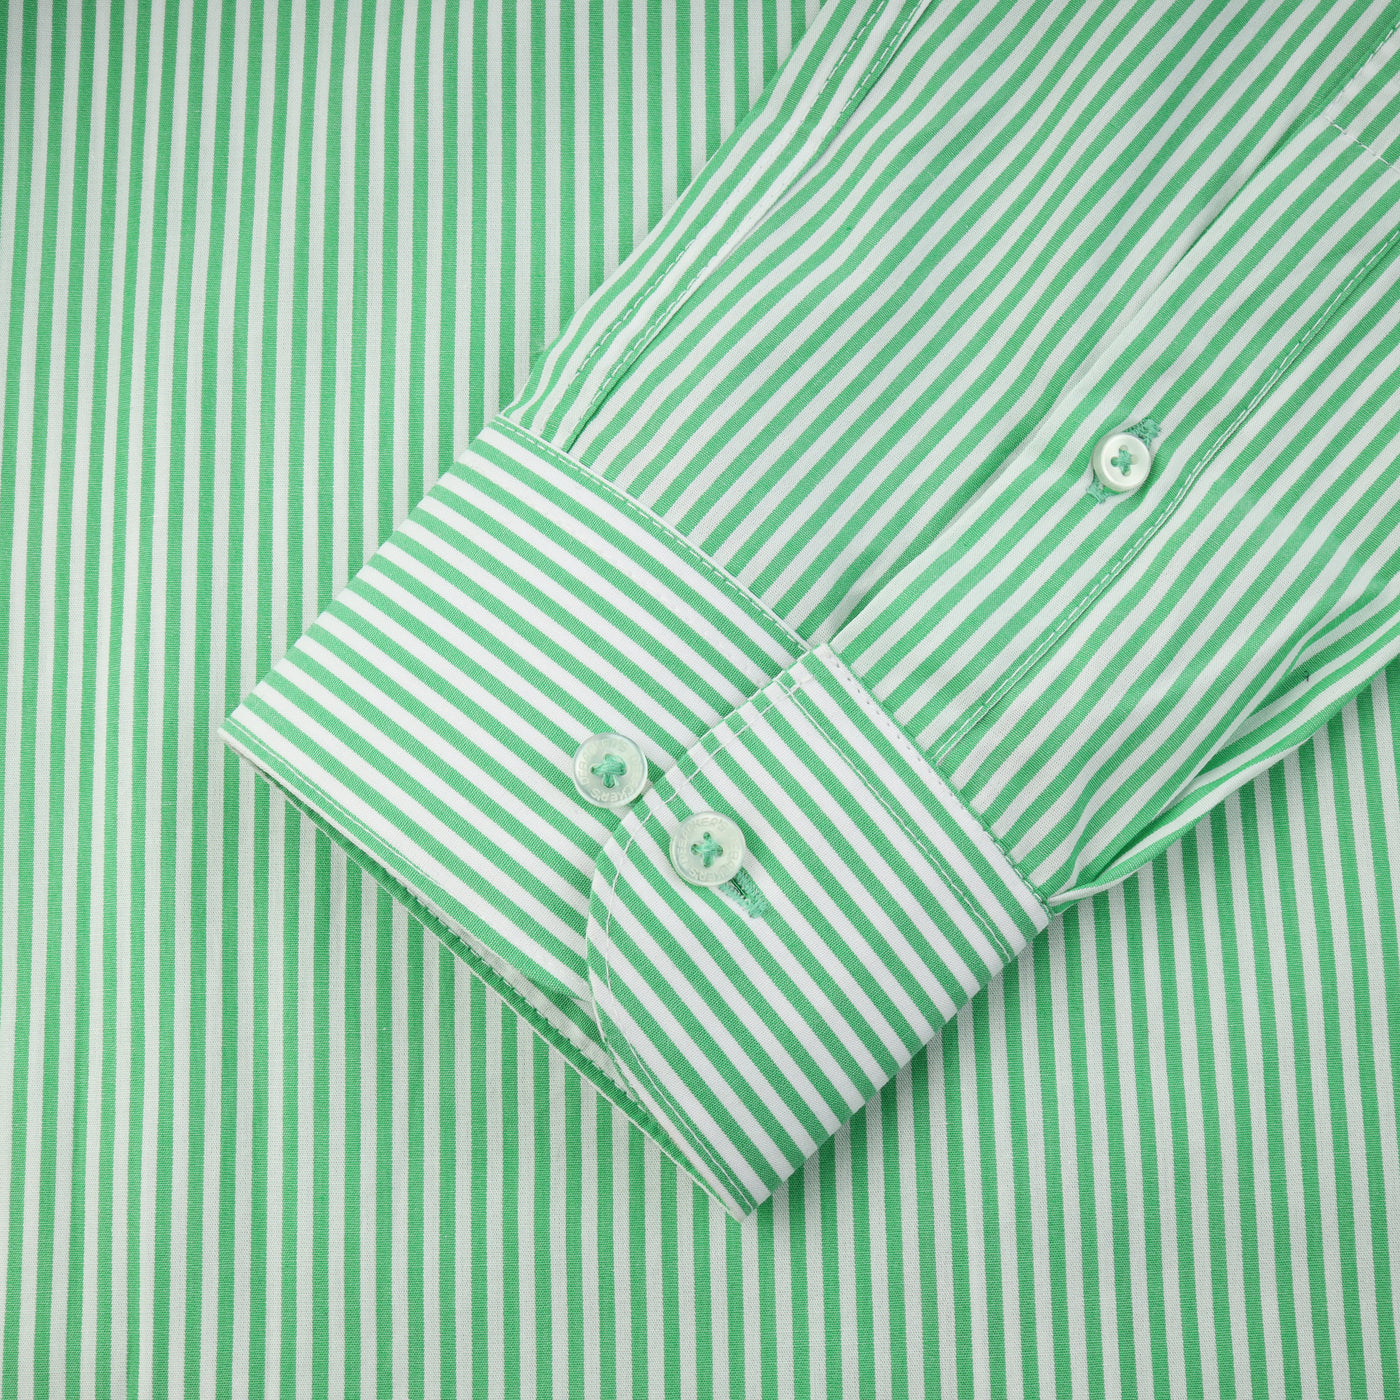 Striped White & Green Cotton Casual Shirt